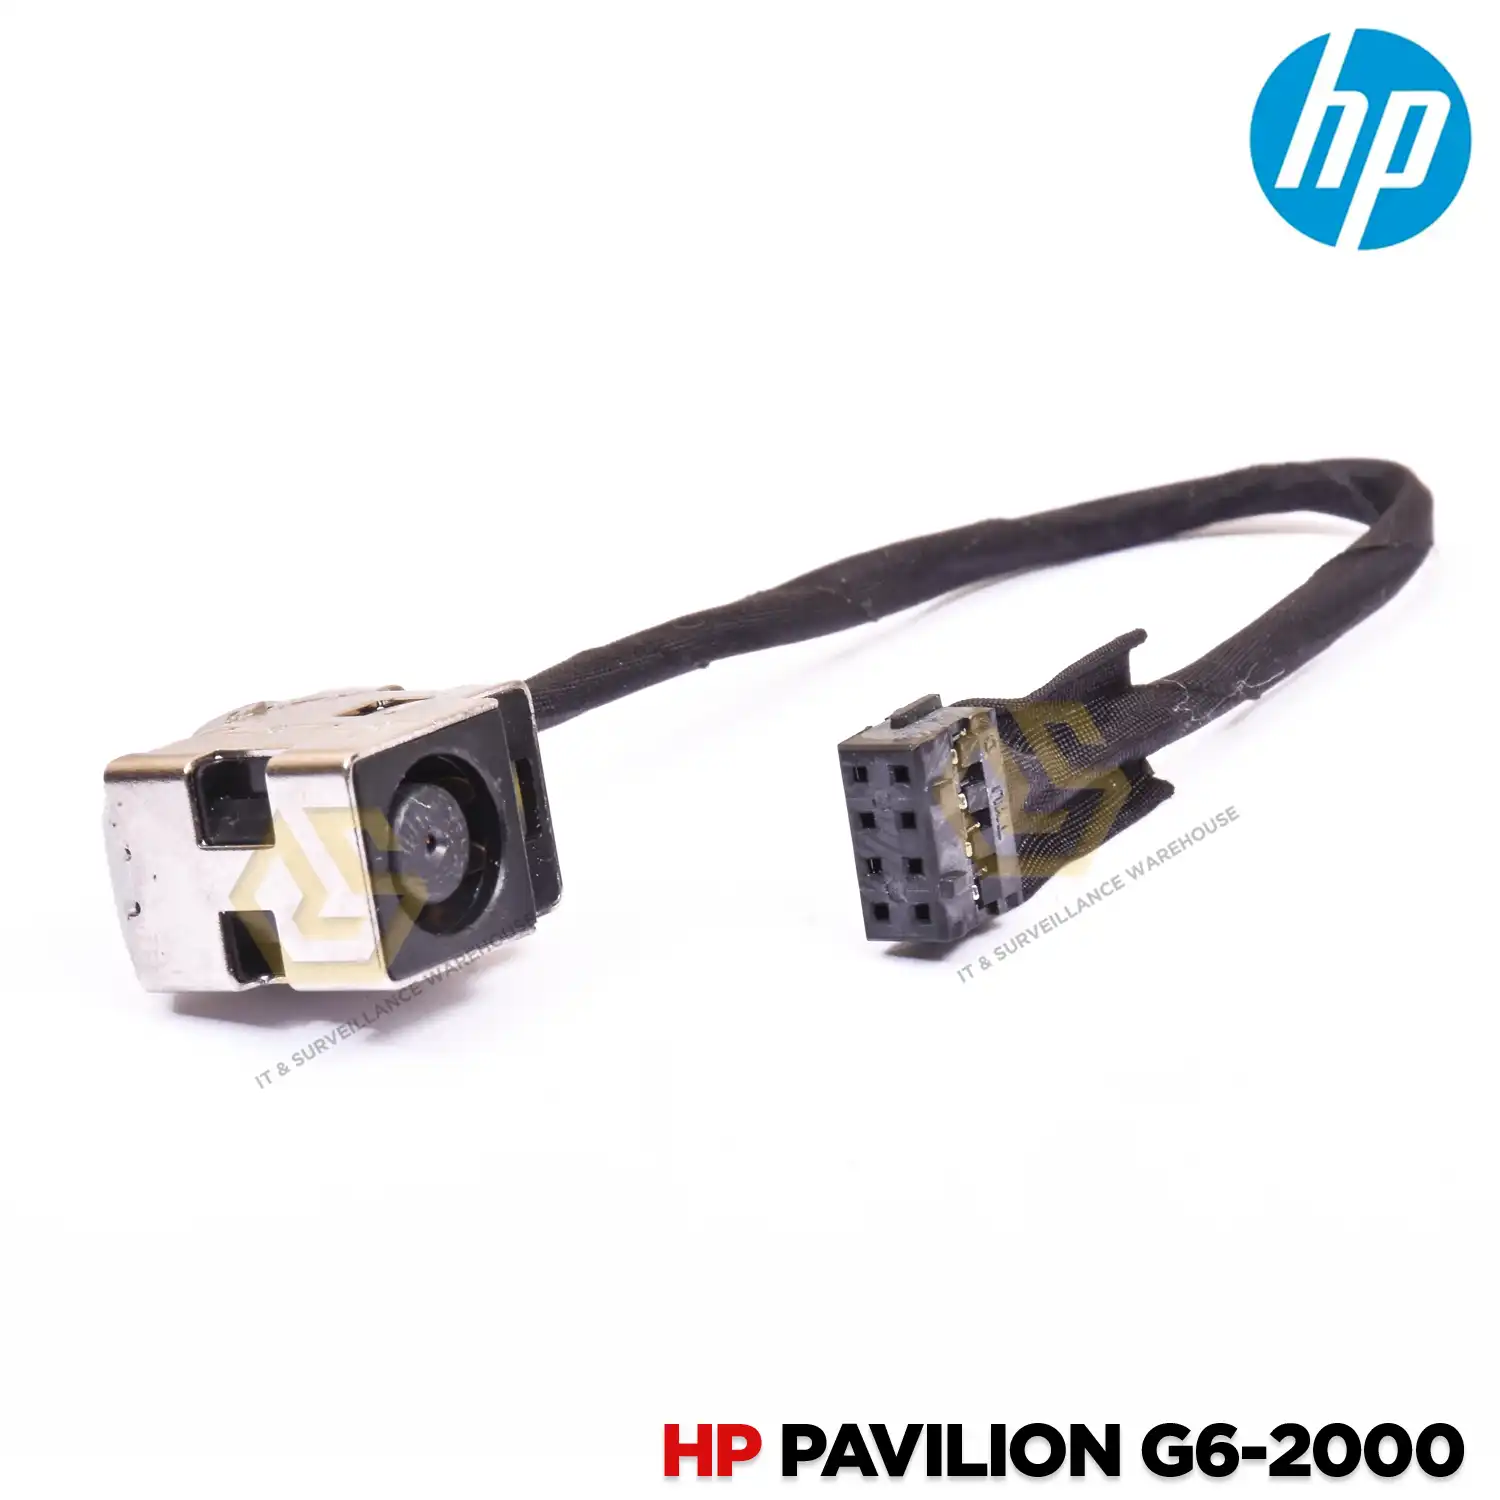 LAPTOP DC JACK FOR HP PAVILION G6-2000 | G6-2000 | G7-2000 | CQ58 | DM4-3000